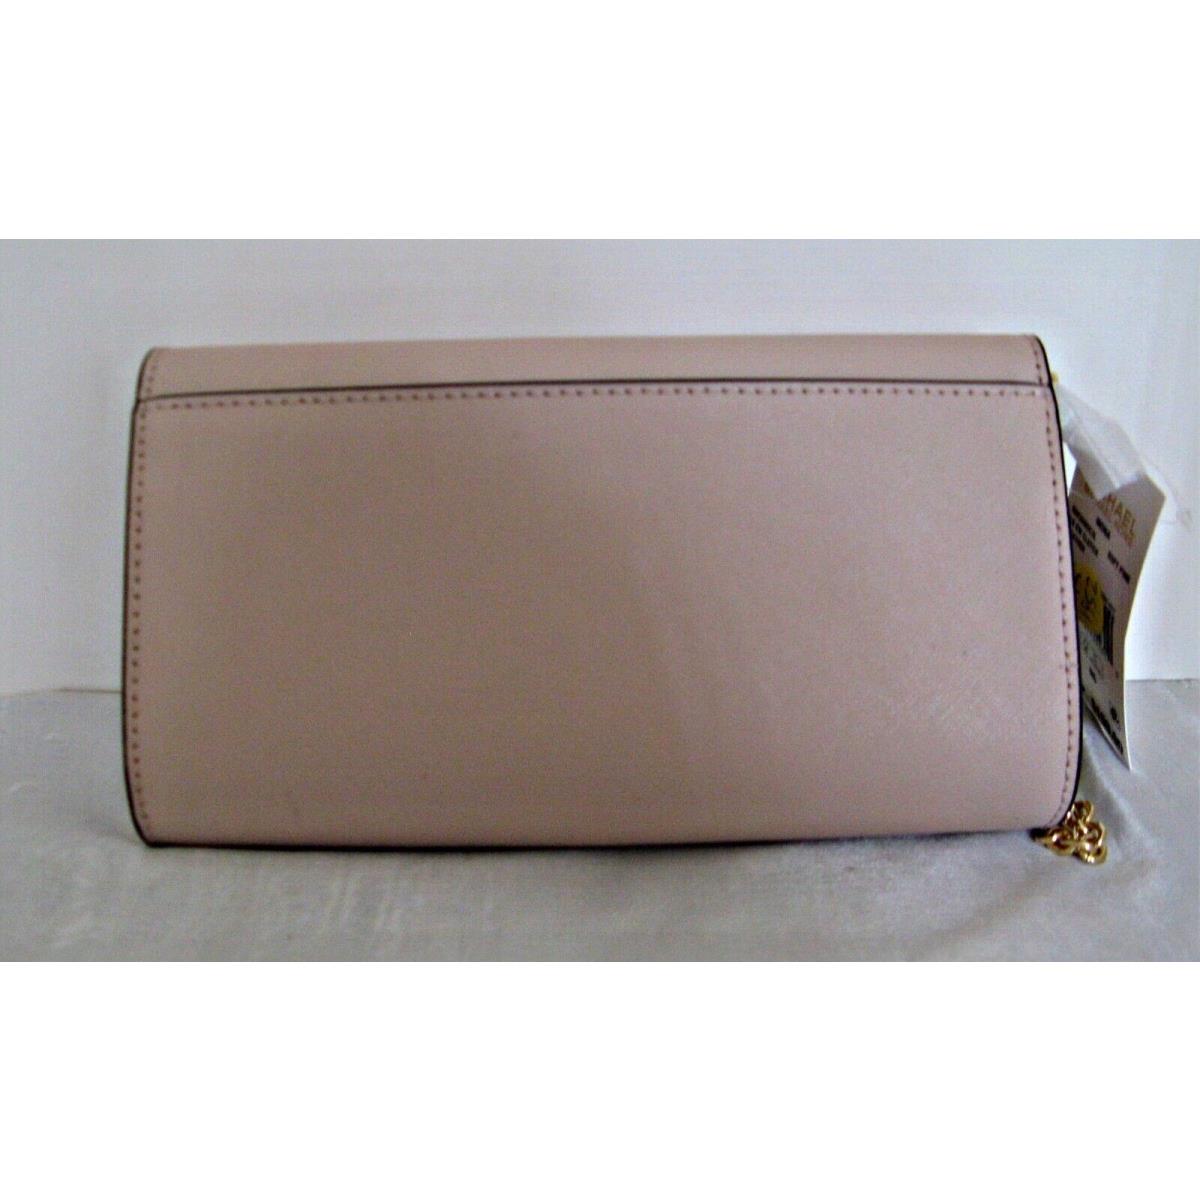 Michael Kors - Mona Large EW Leather Clutch - Soft Pink